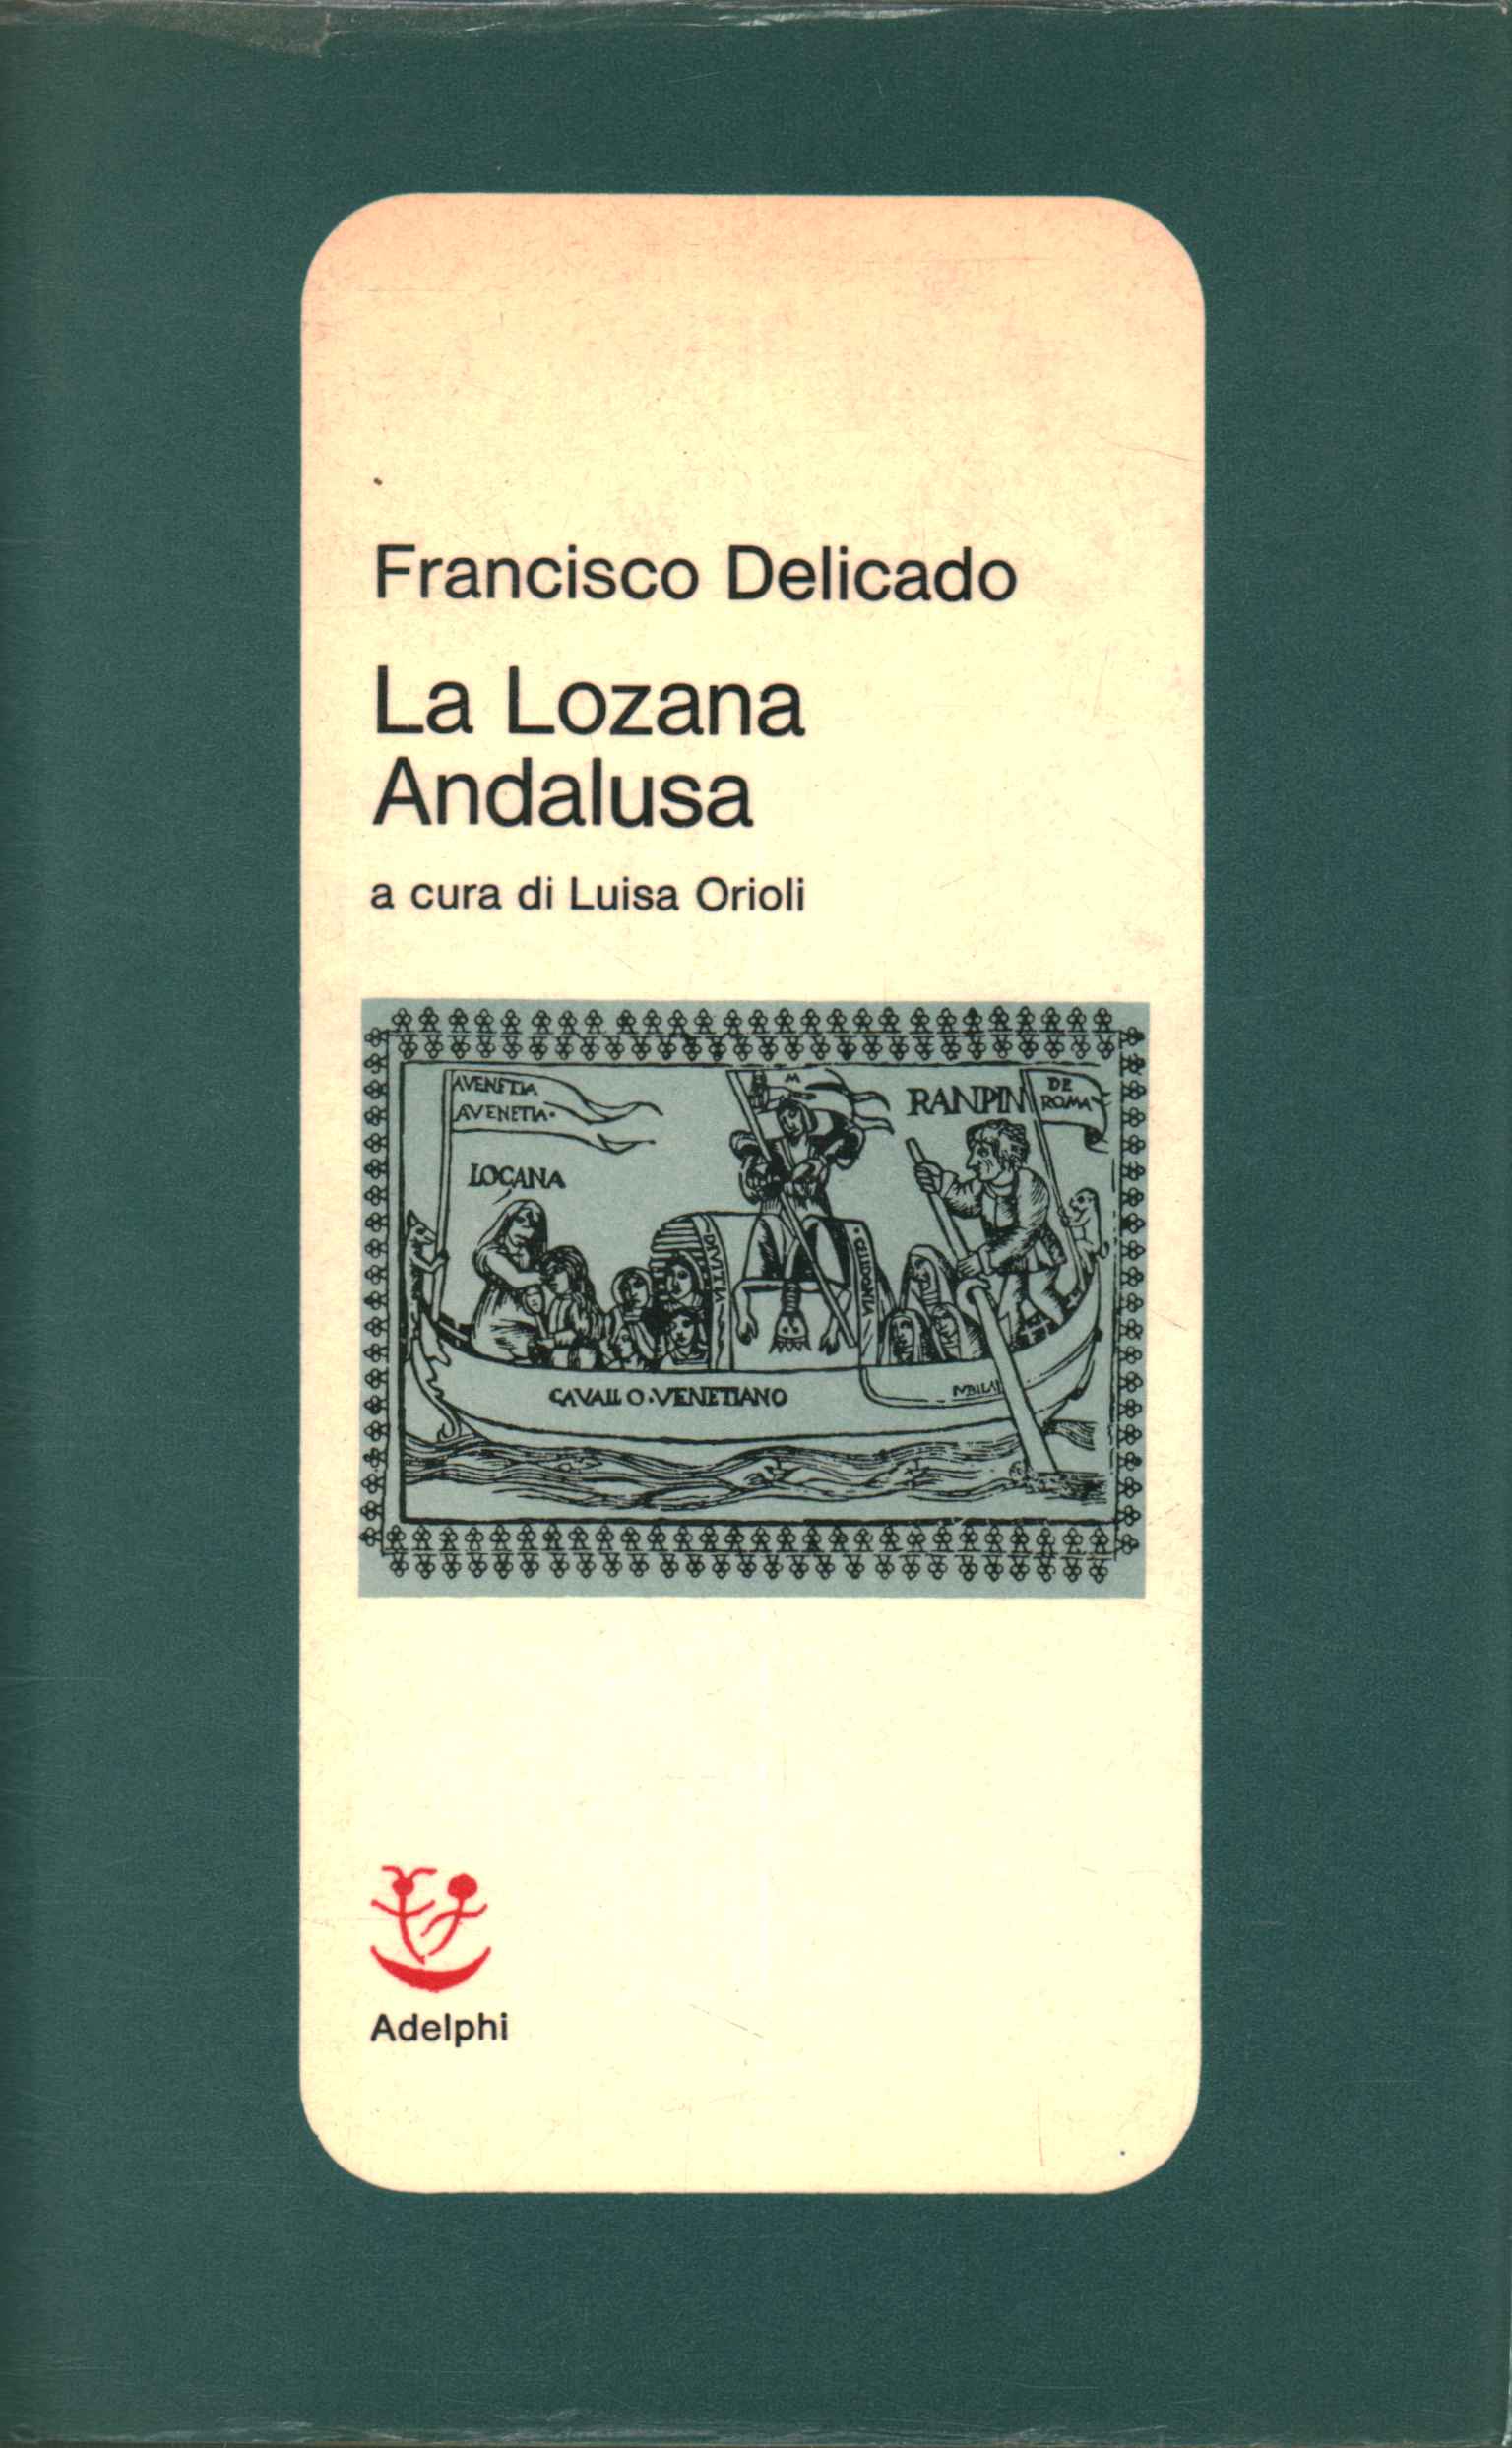 The Andalusian Lozana